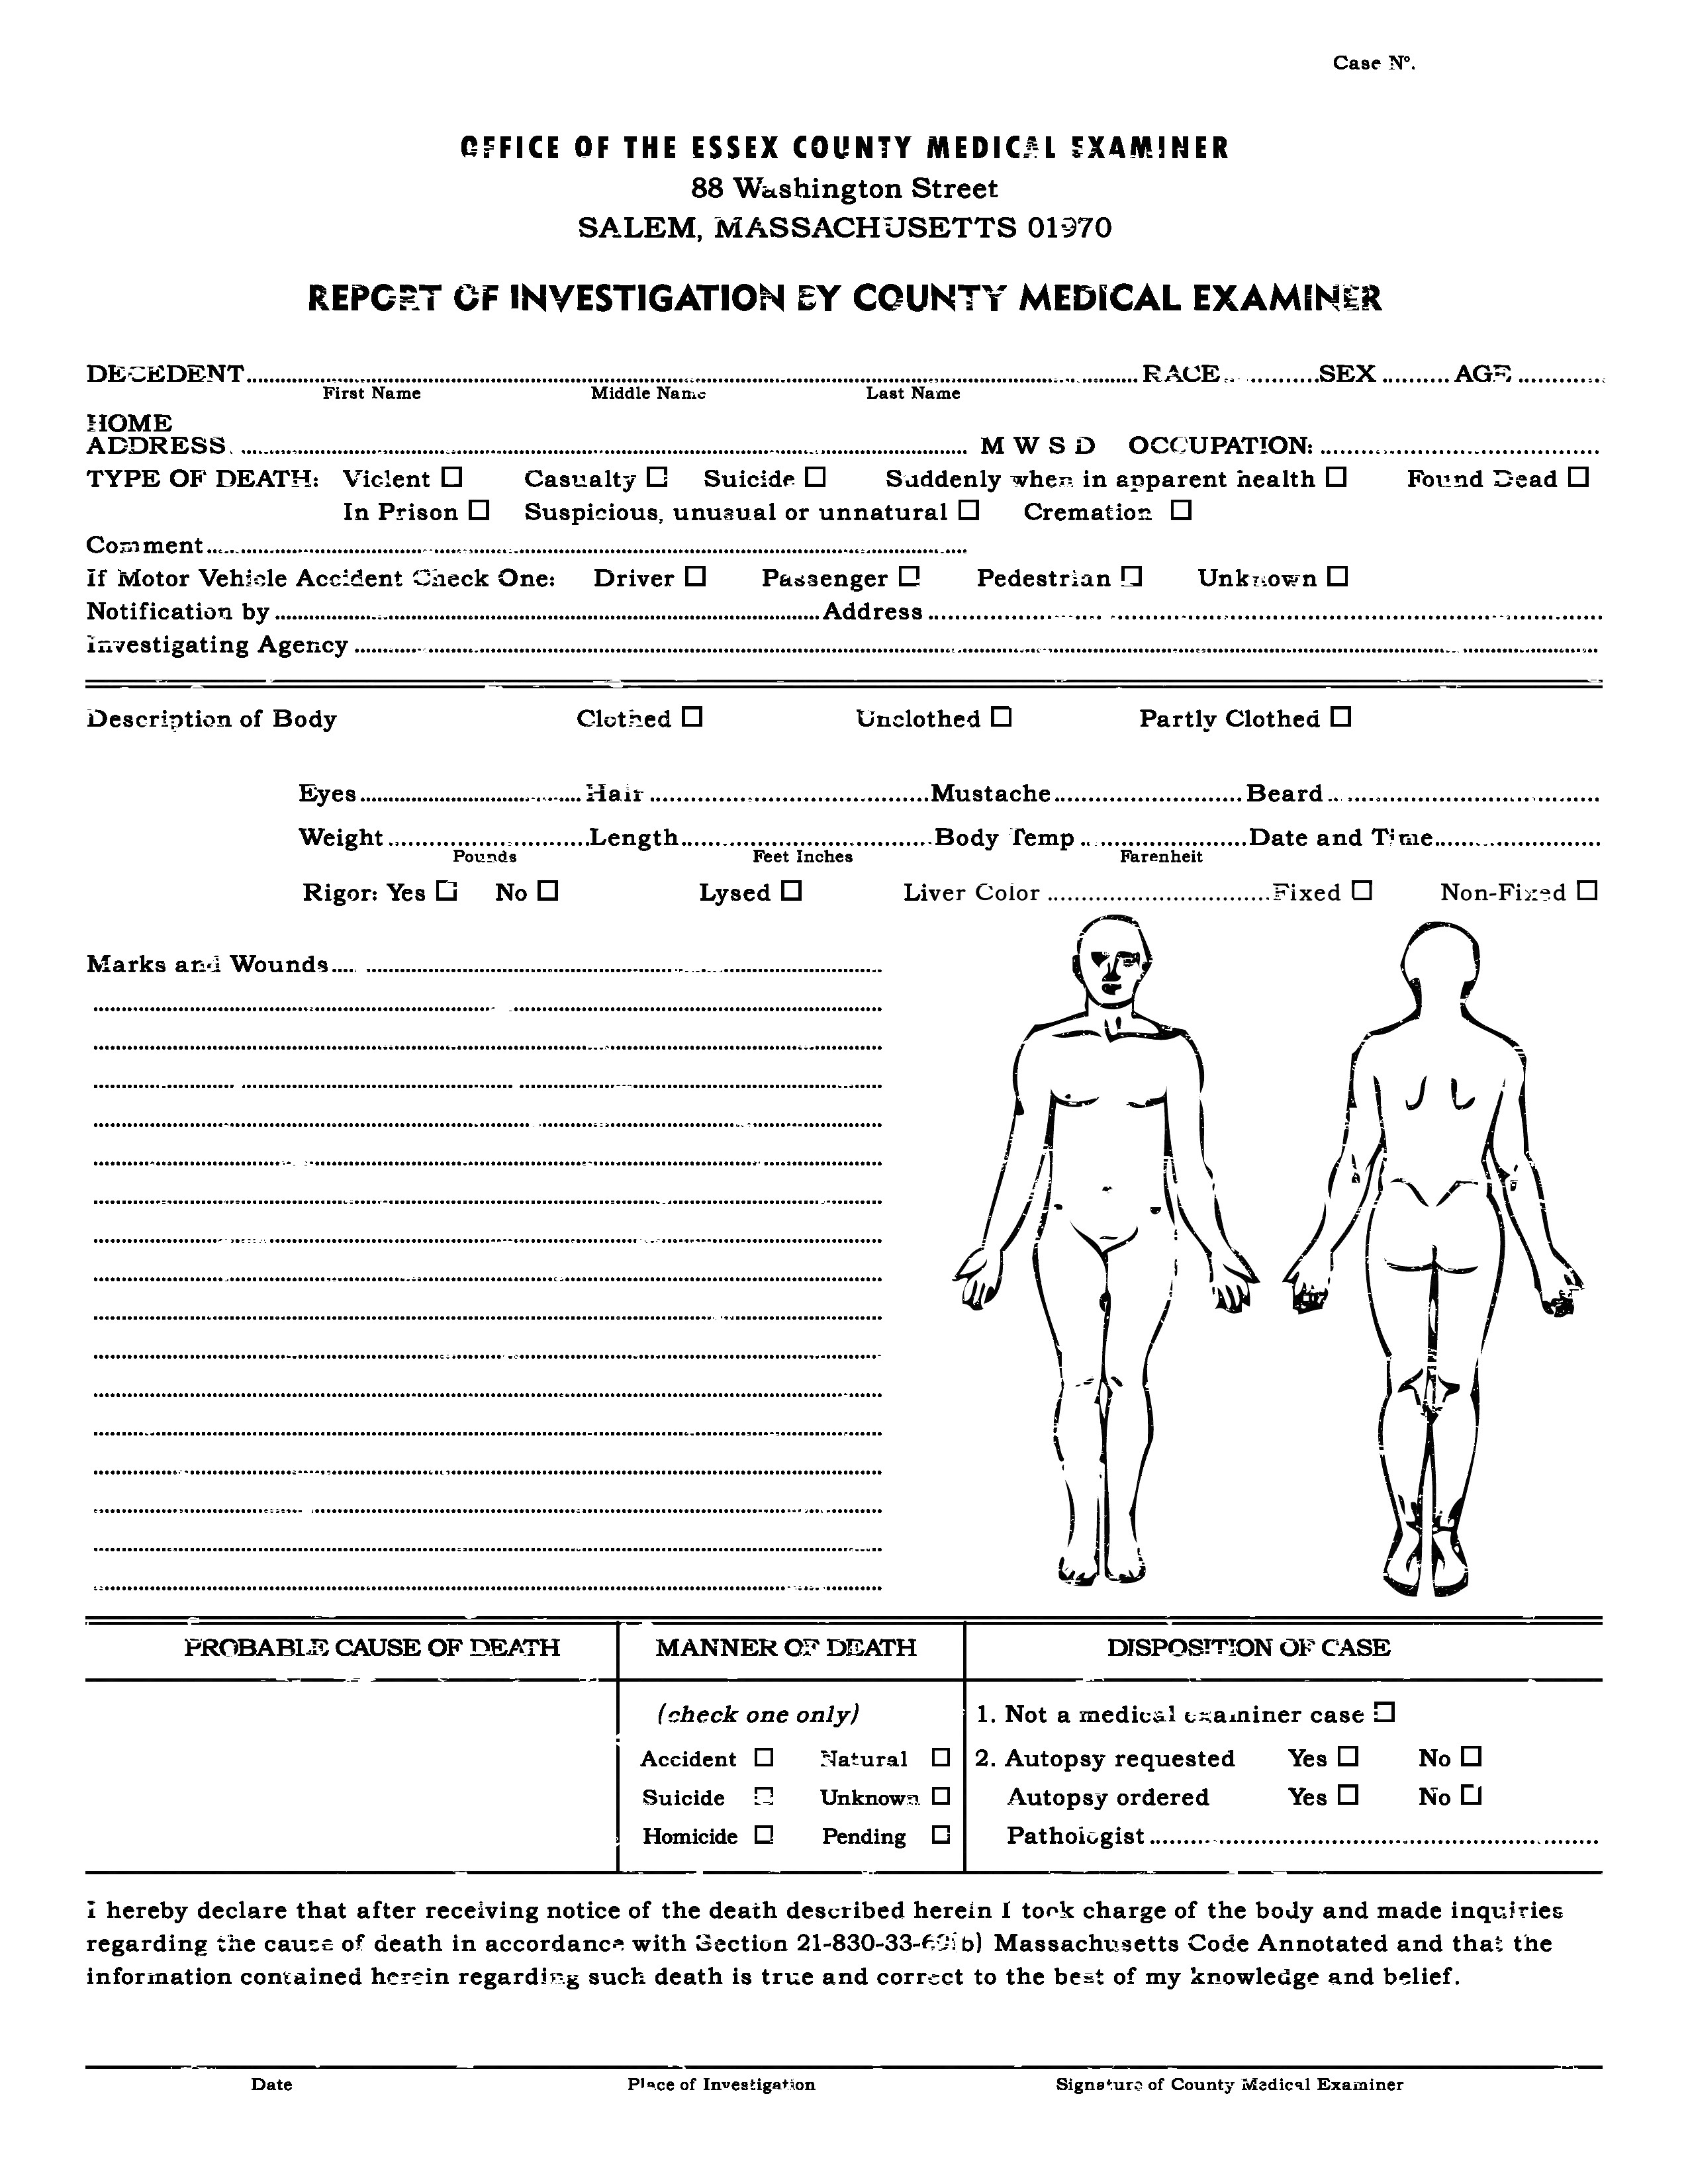 Autopsy Report Template - Atlantaauctionco Inside Autopsy Report Template